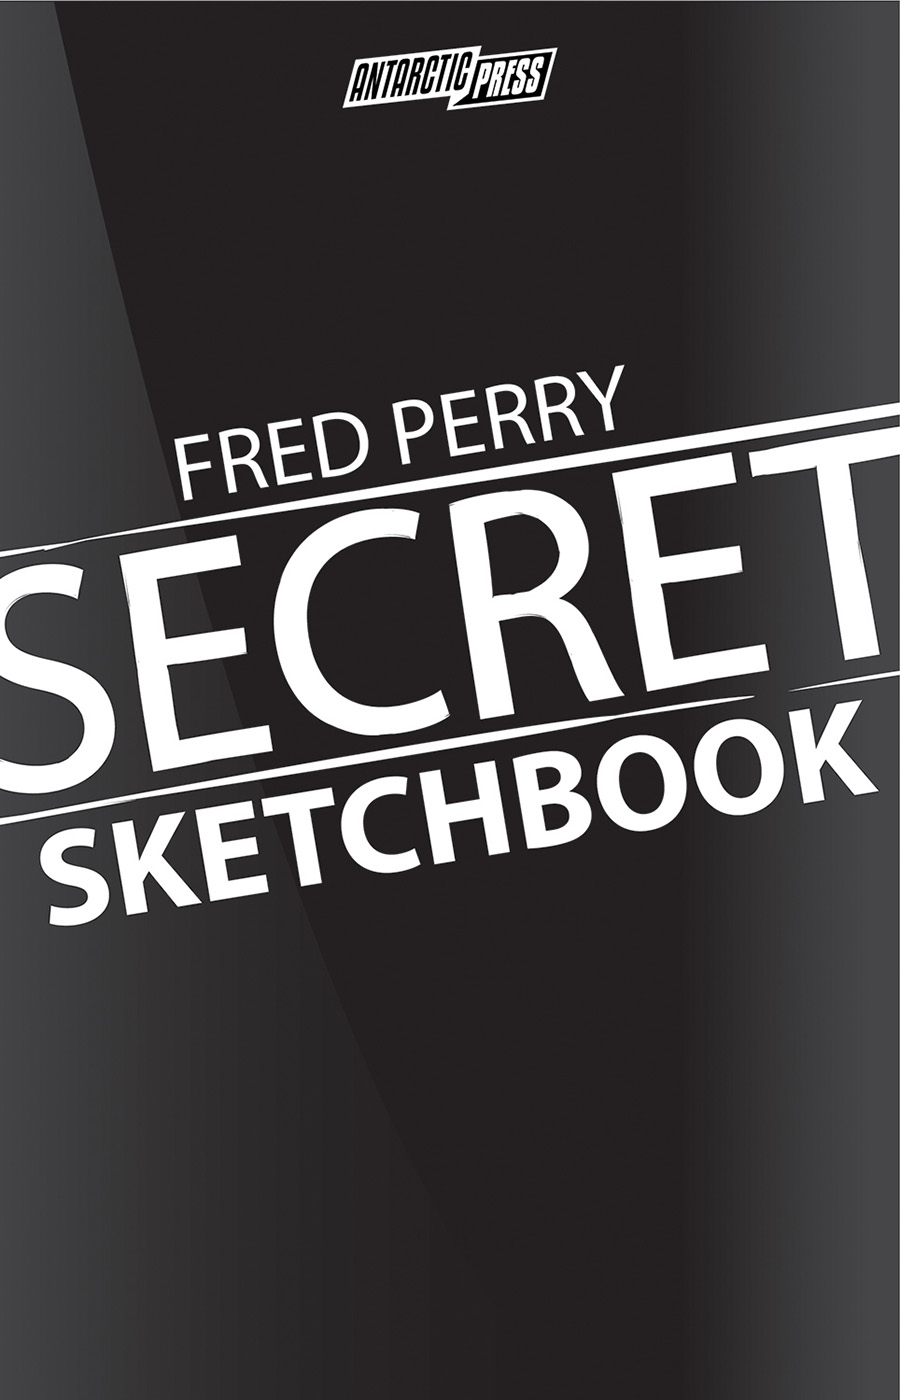 Fred Perry Secret Sketchbook #1 (One Shot)